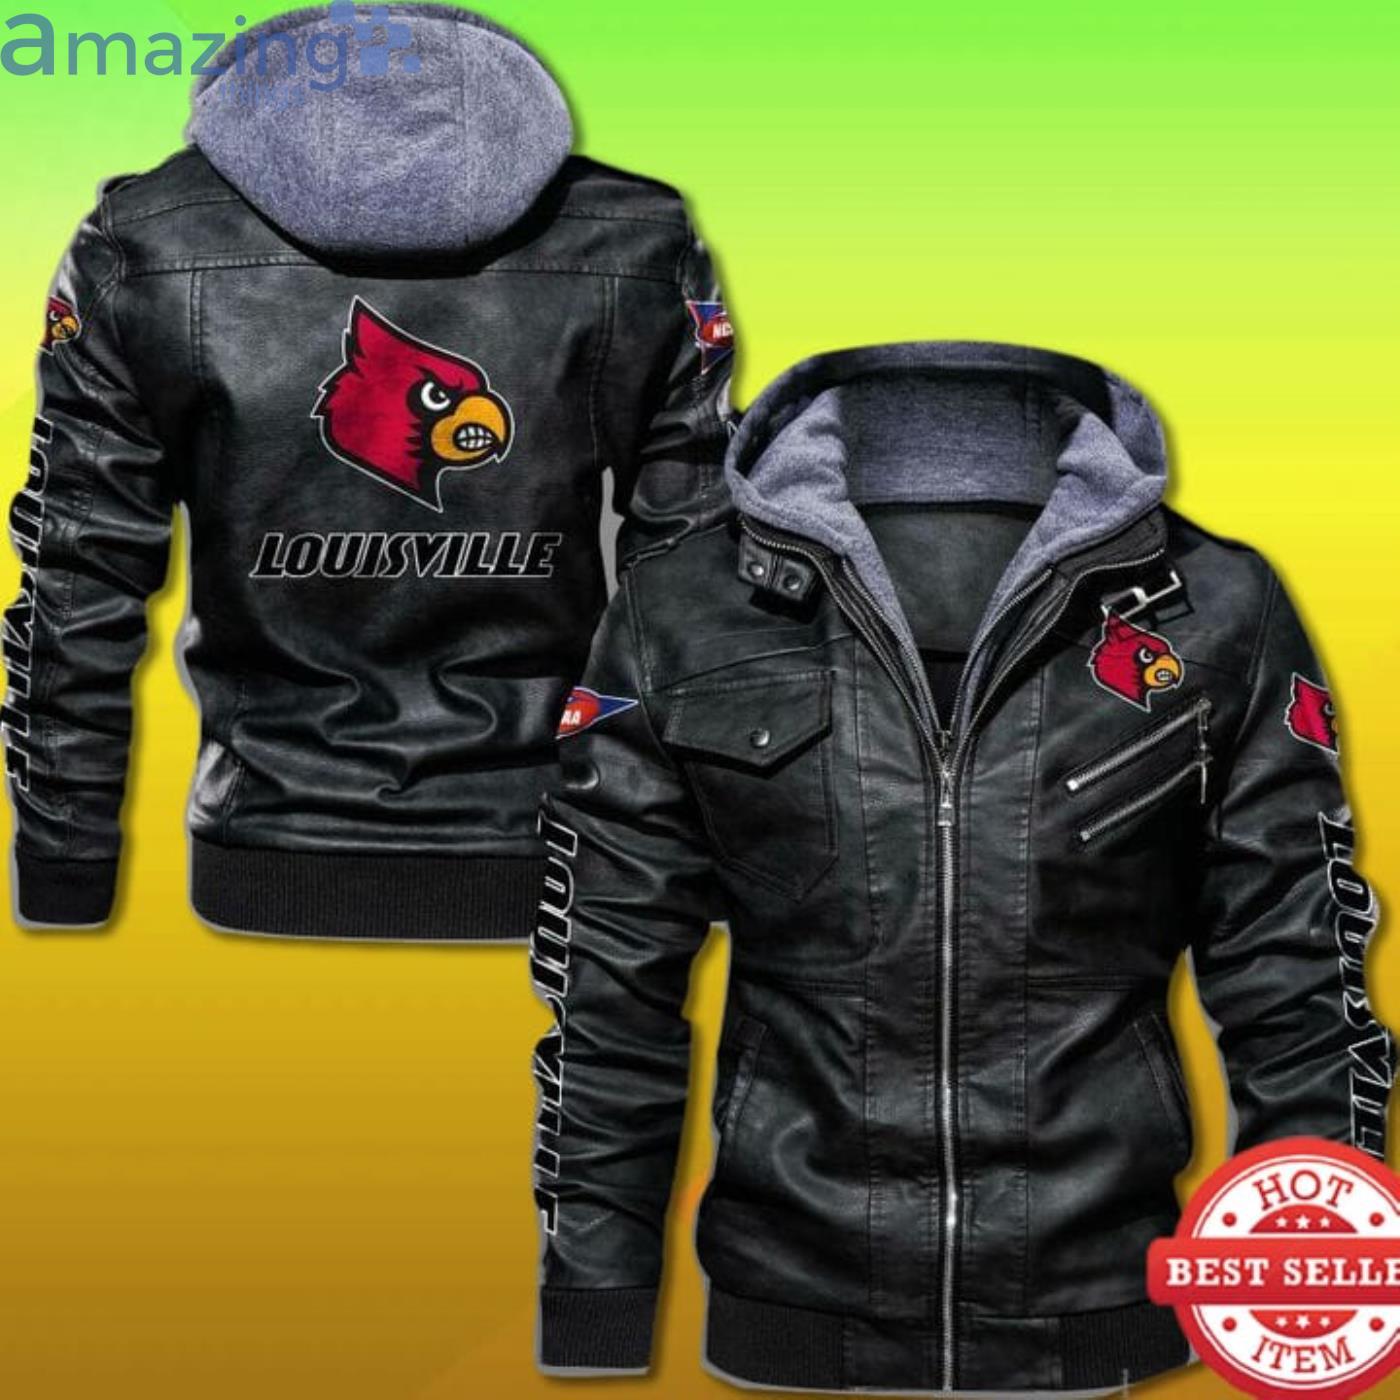 Louisville Cardinals 2D Trending Leather Jacket